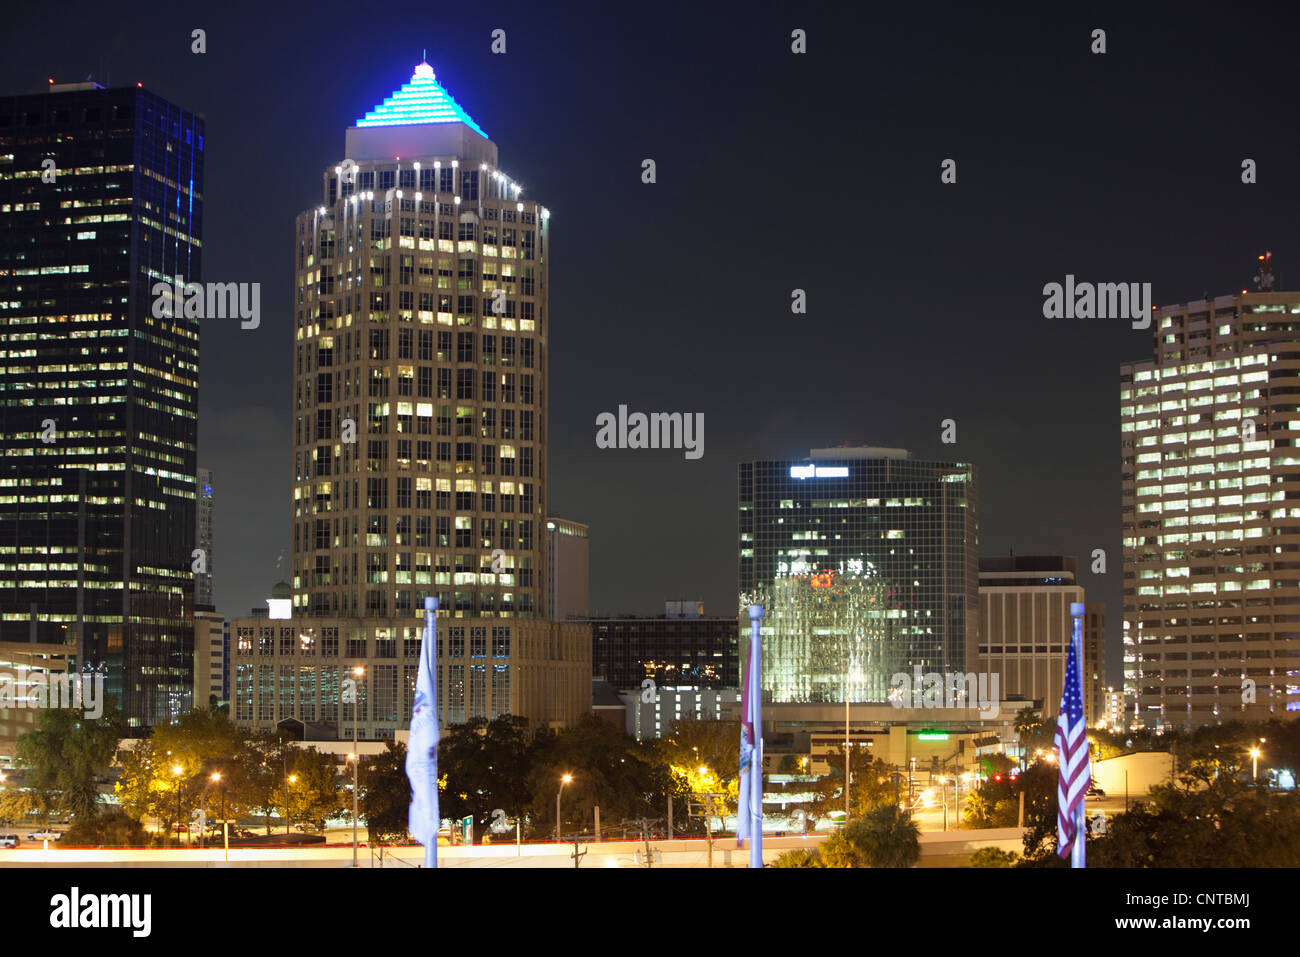 Illuminated office buildings at night Stock Photo